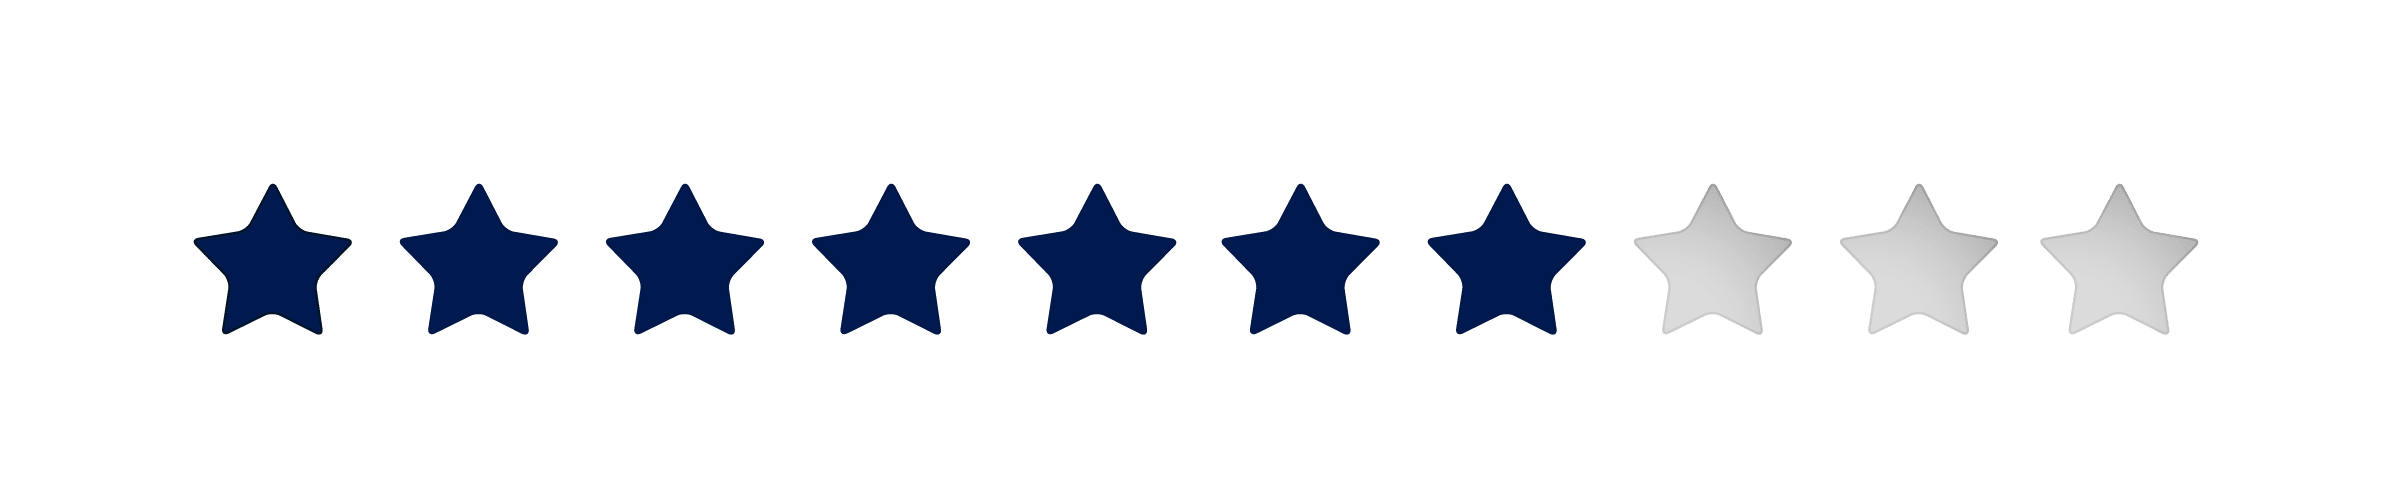 7 Star Rating